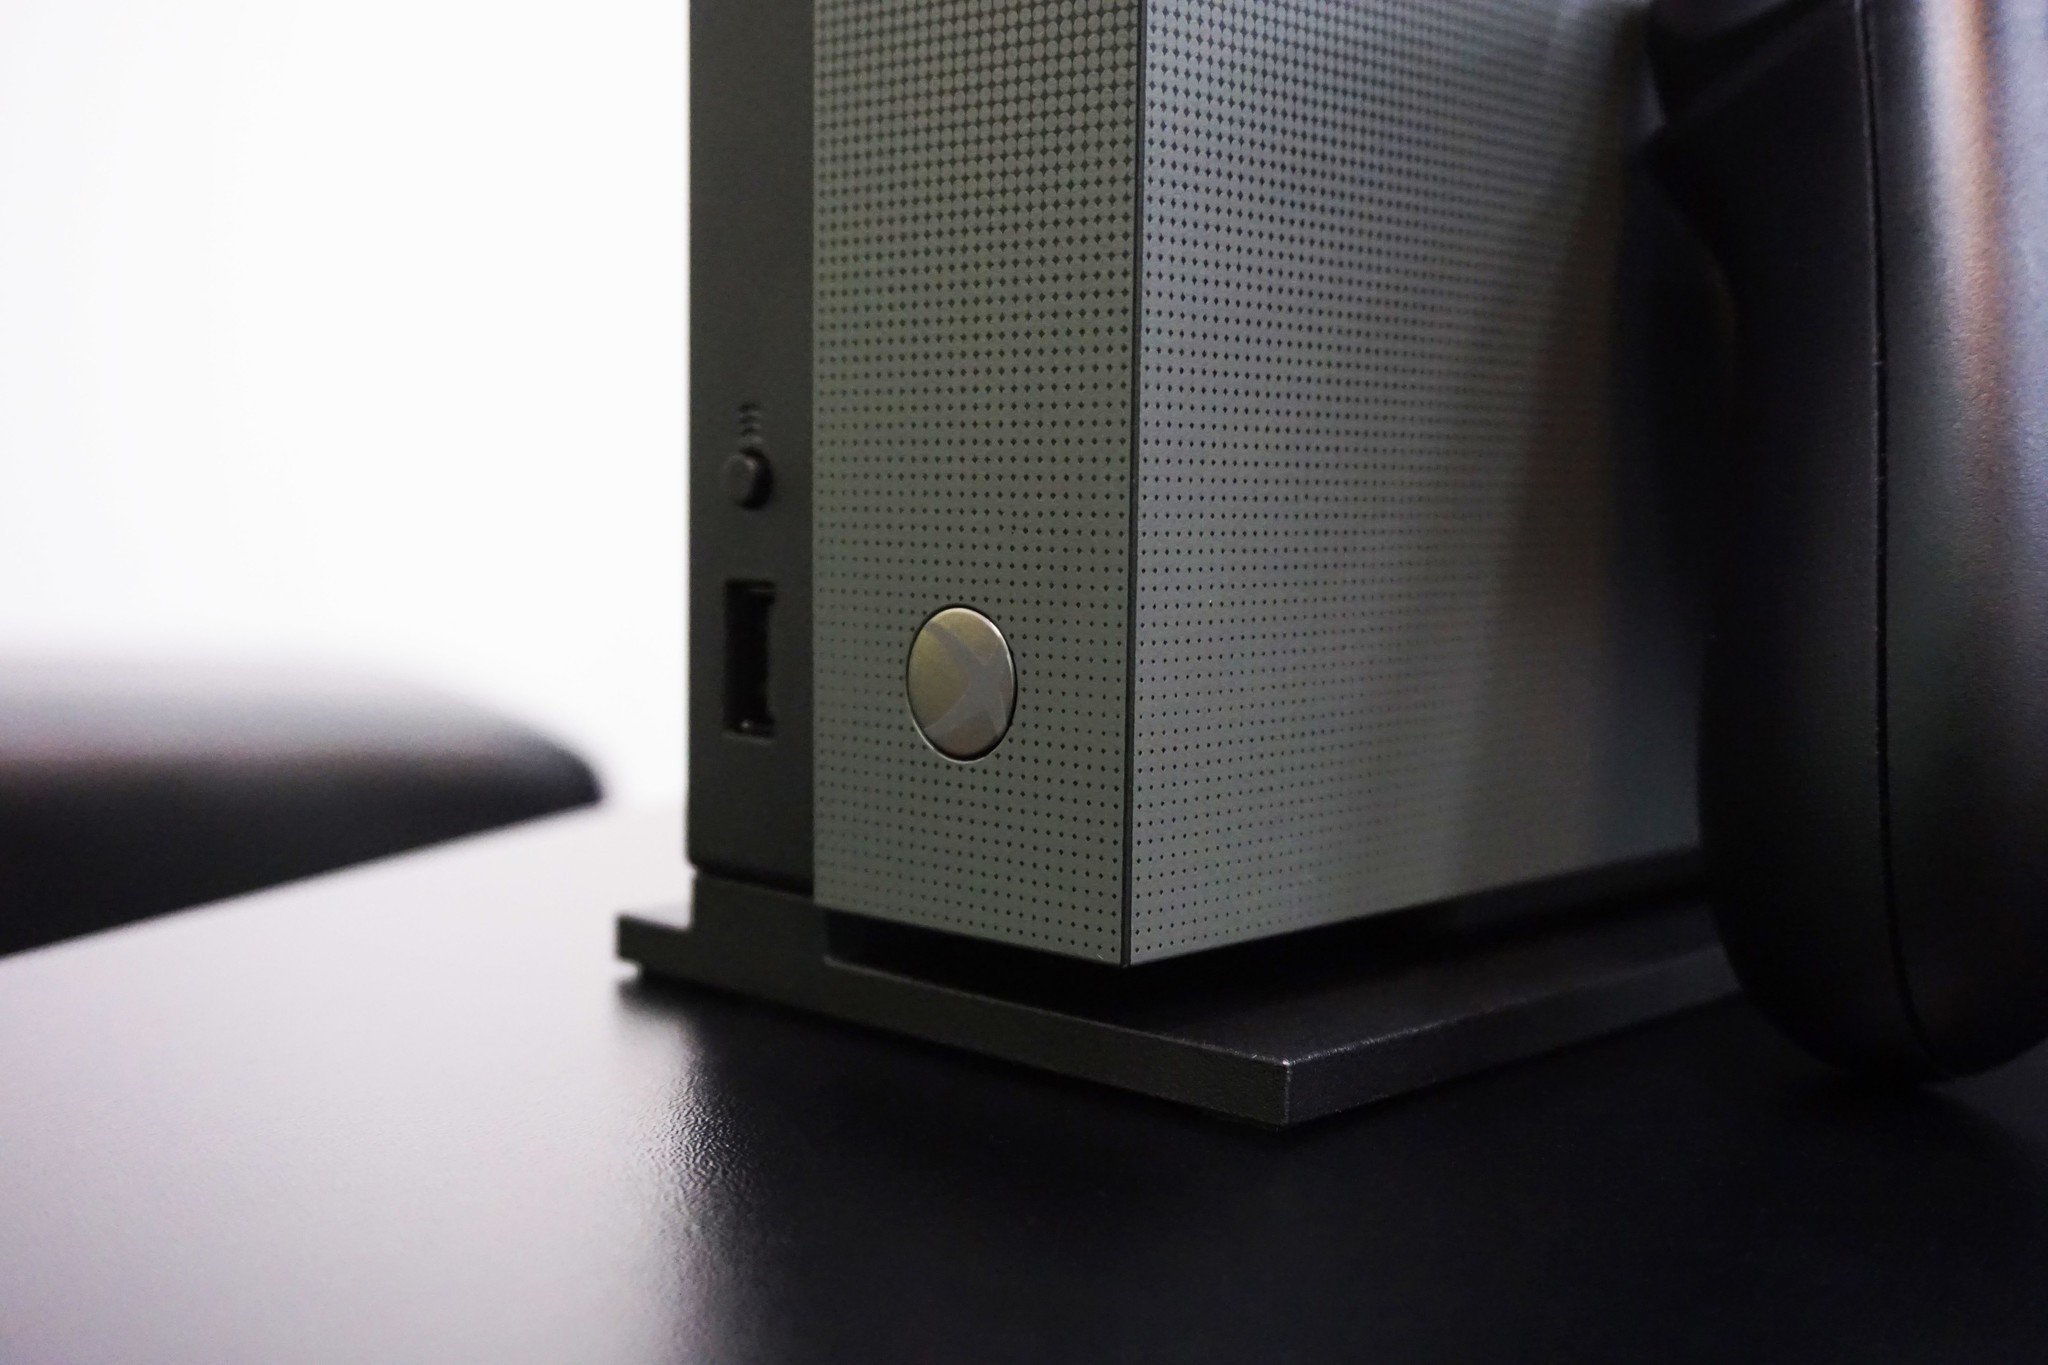 Microsoft launches dedicated Xbox Insider blog